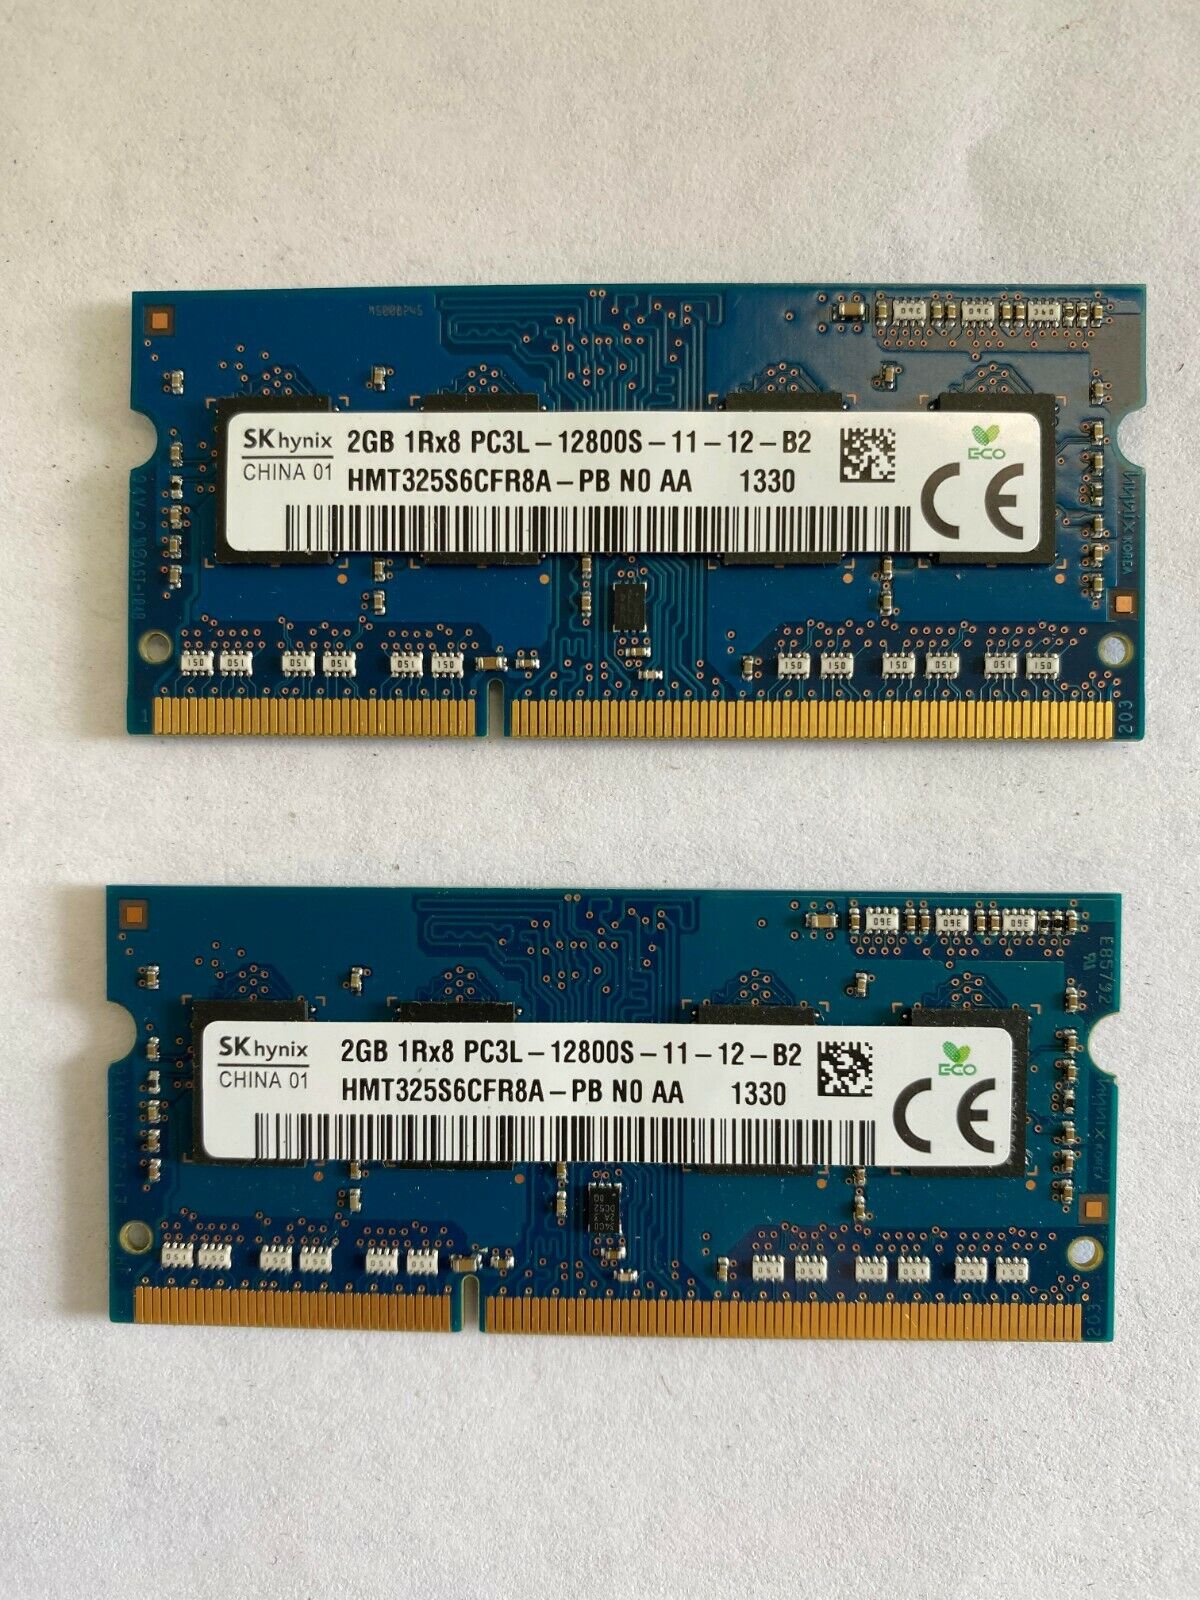 4GB (2x 2GB) Kit DDR3 PC3-10600s or PC3-12800s Laptop SODIMM Memory RAM